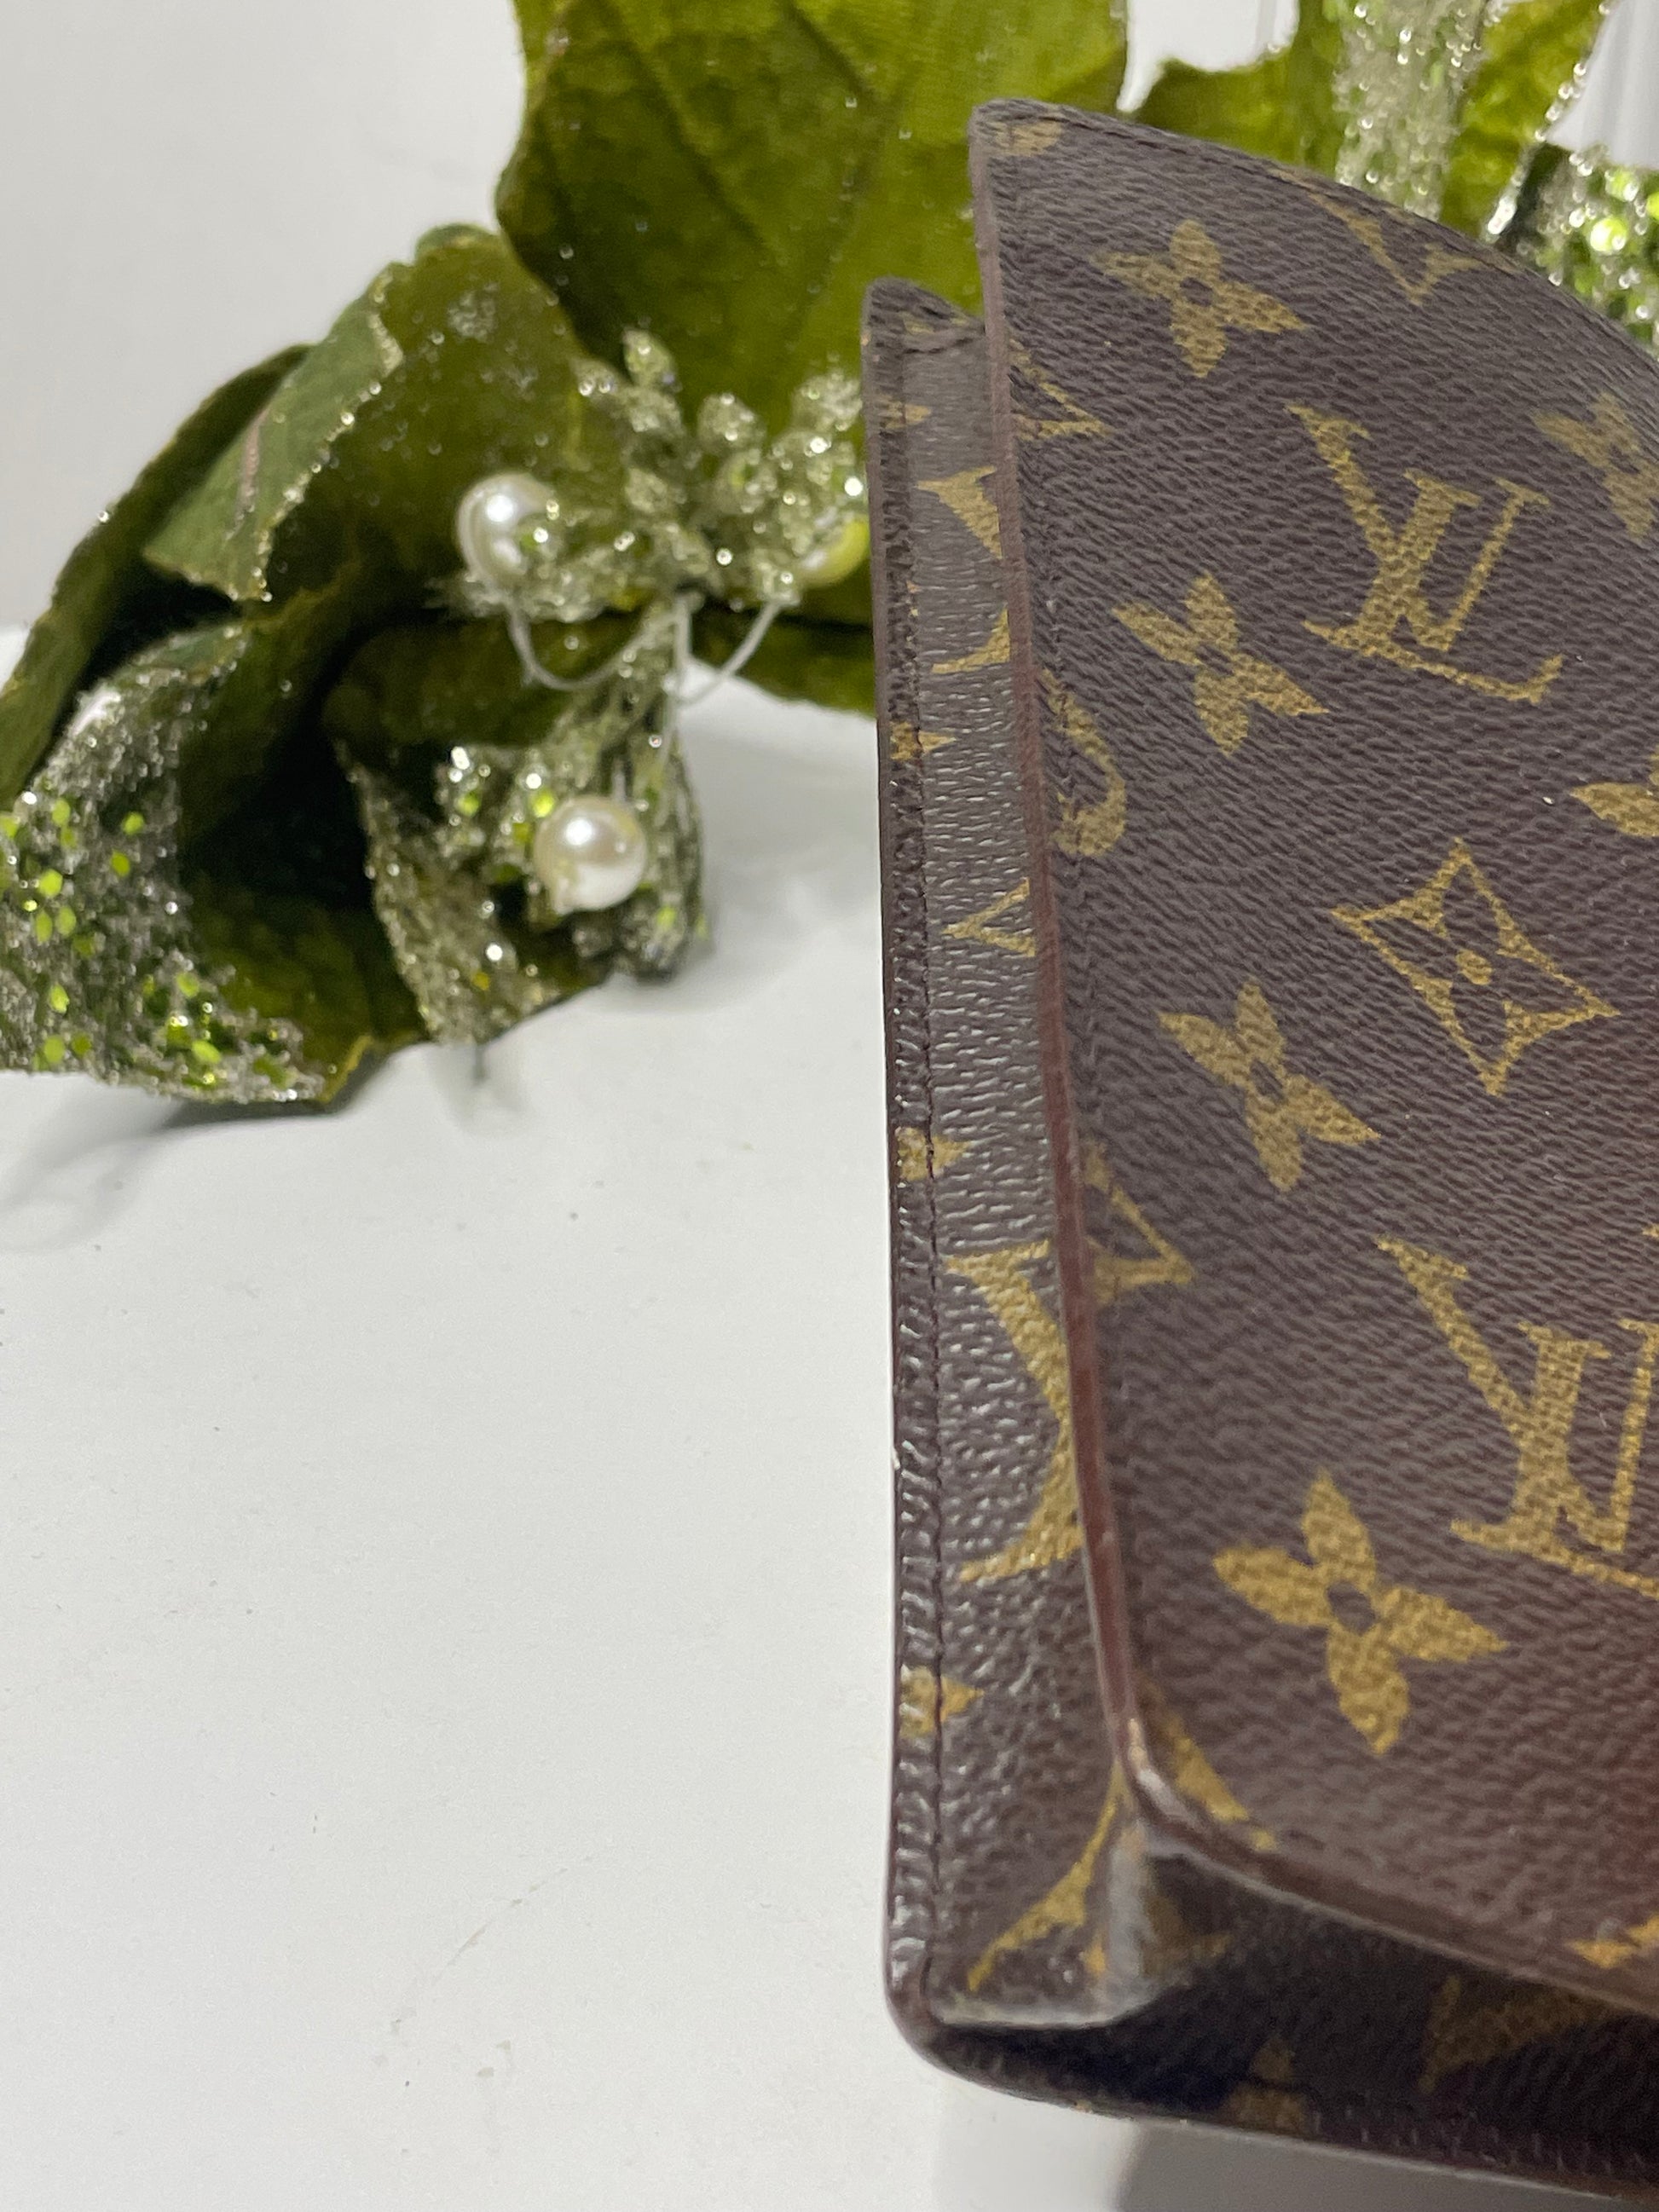 Louis Vuitton Monogram Canvas and Leather Glasses Case Bag